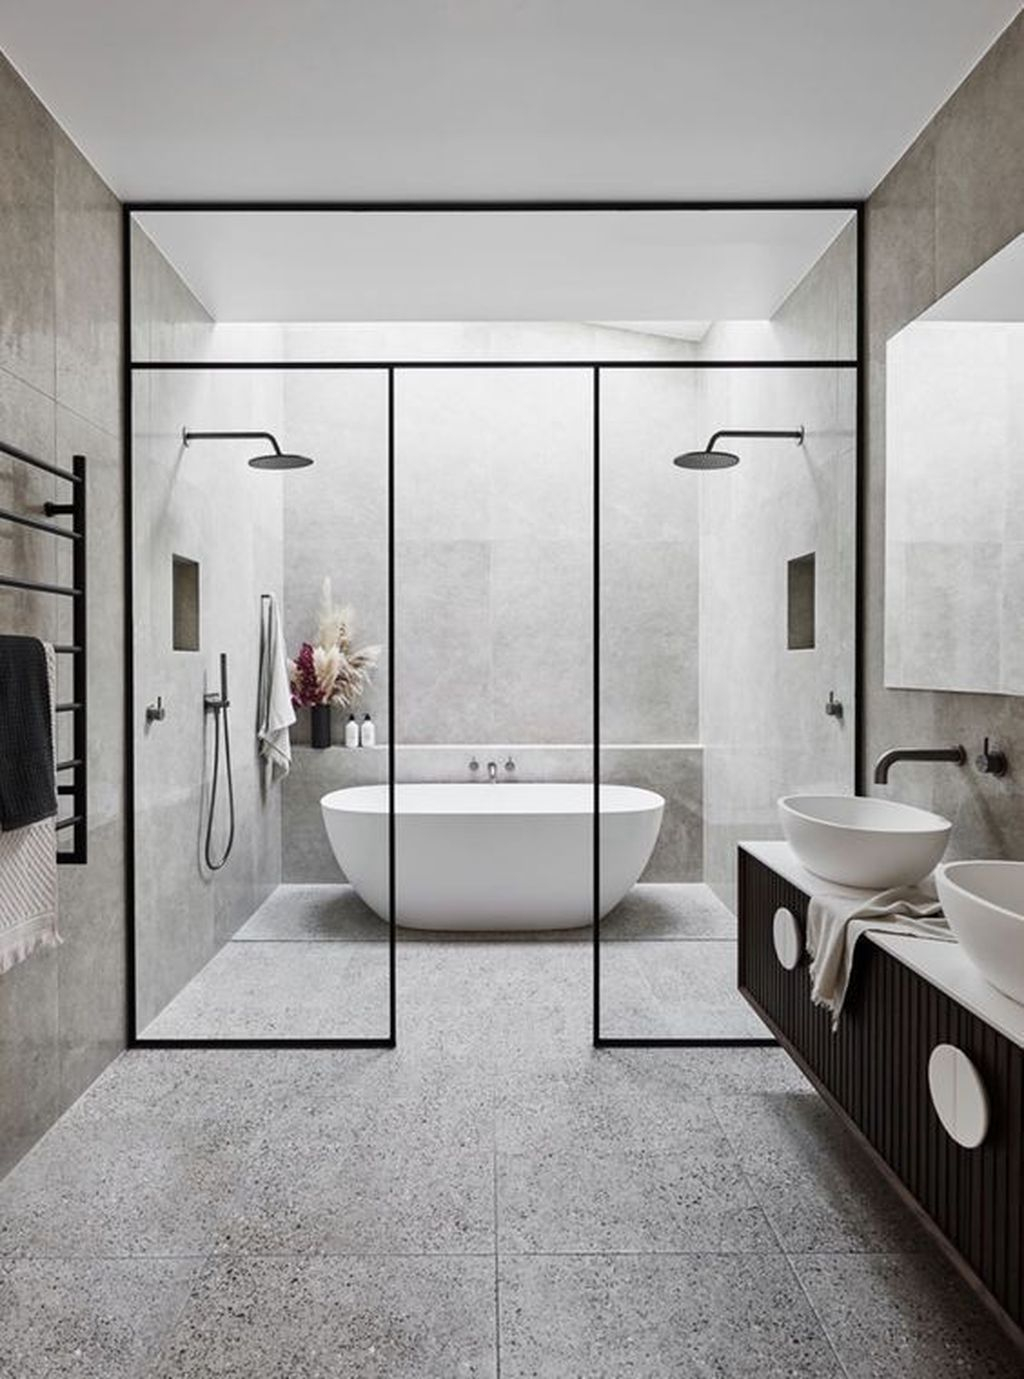 Unusual Bathroom Design Ideas You Need To Know 05